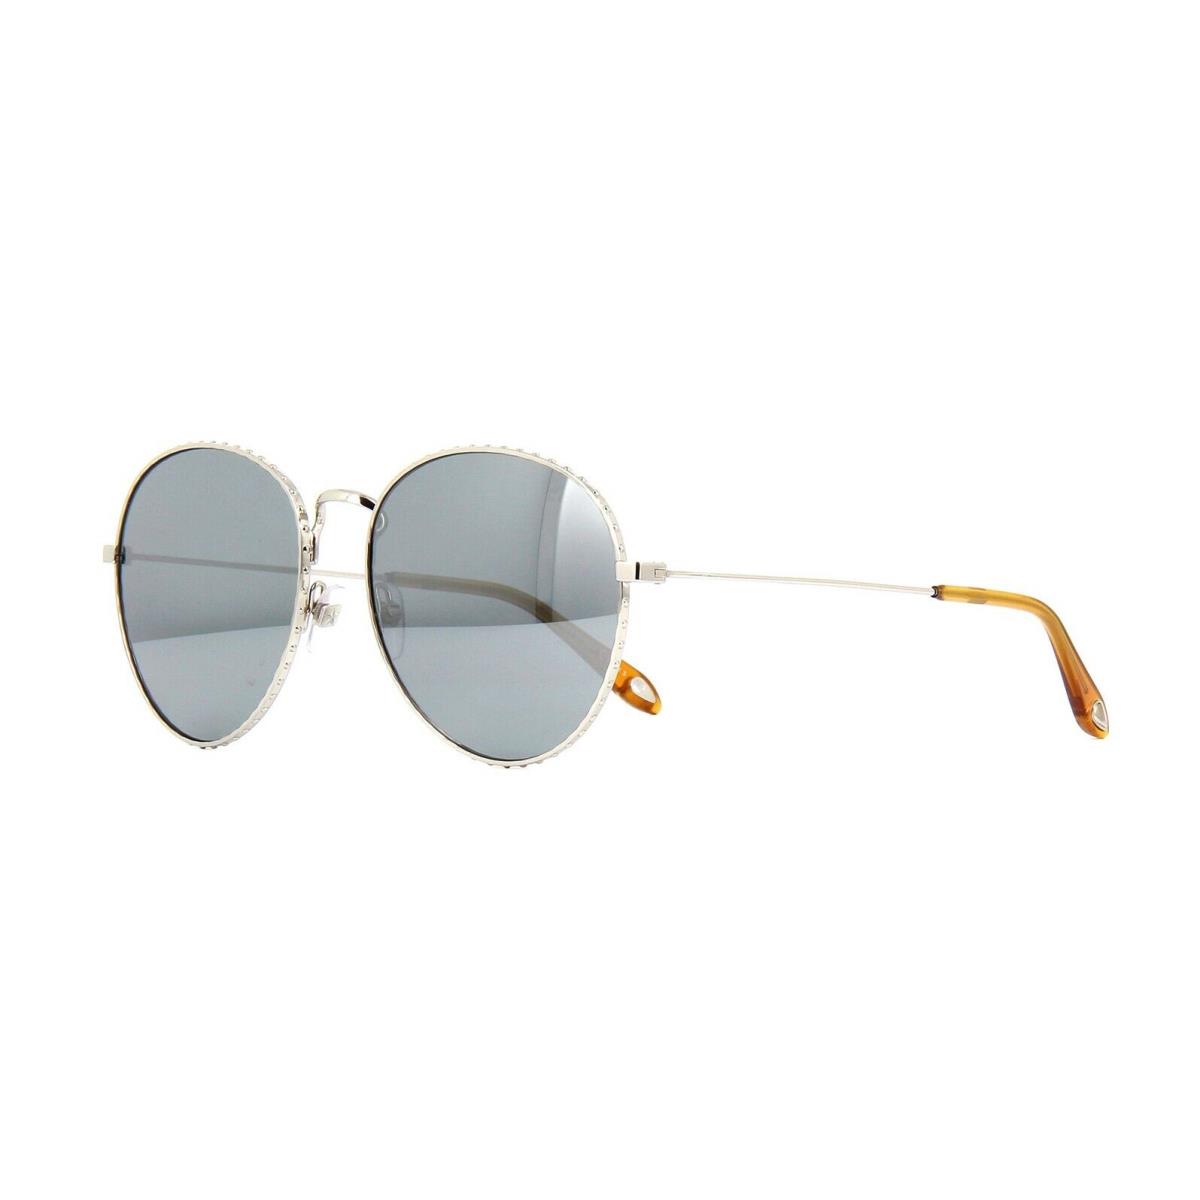 Givenchy Blush GV 7089/S Silver/grey Silver Mirrored 84J/T4 Sunglasses